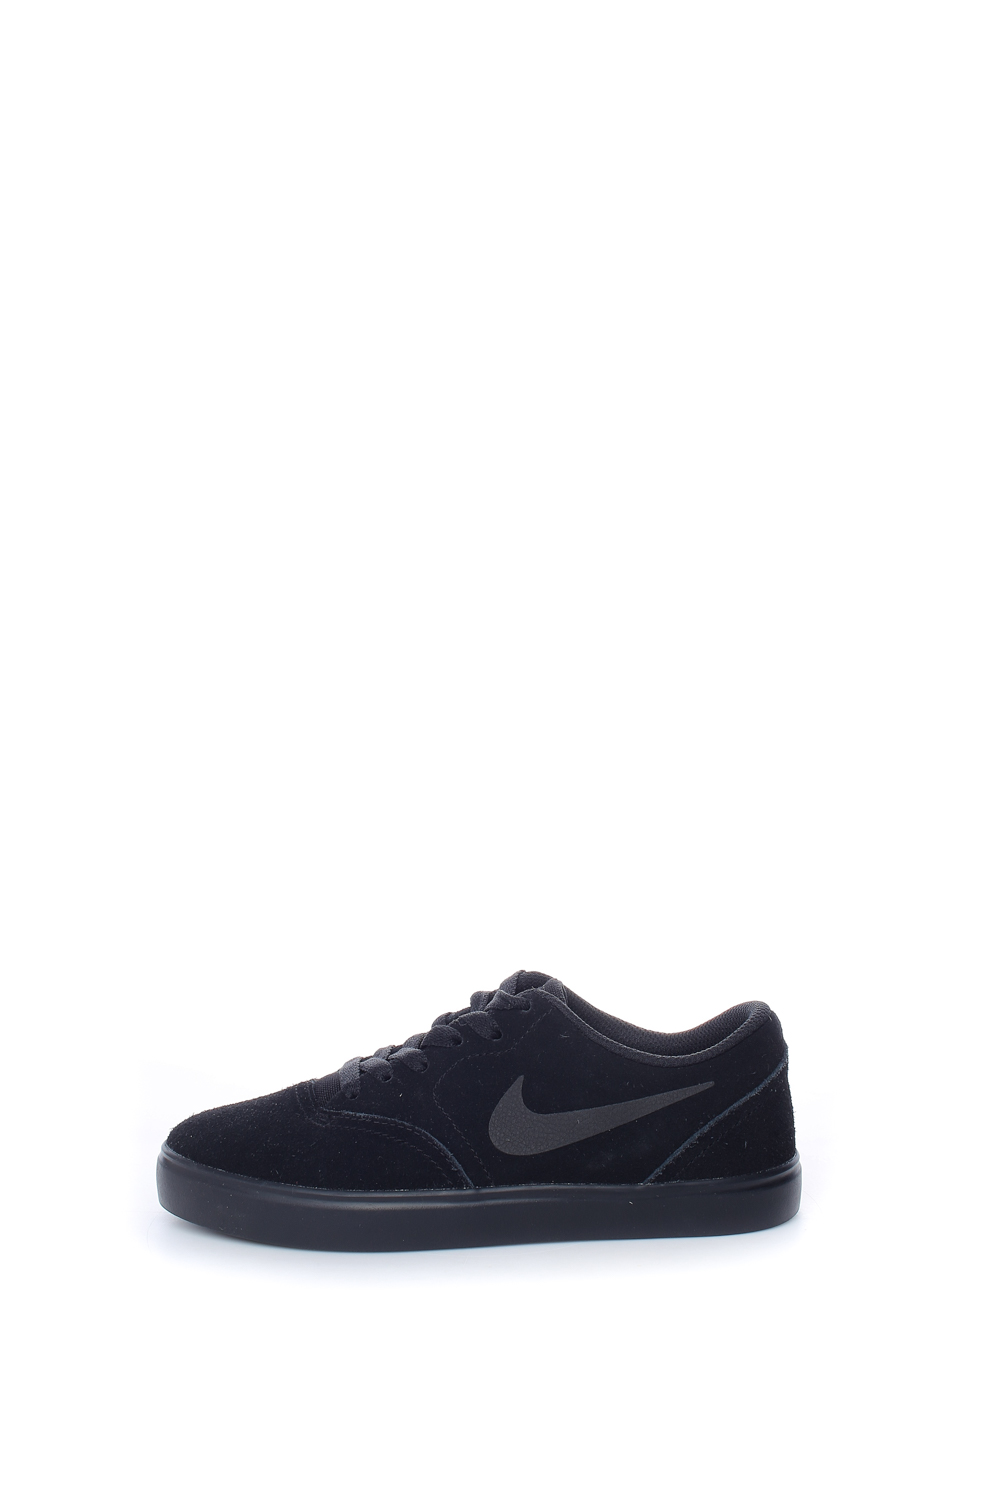 NIKE - Παιδικά παπούτσια Nike SB Check μαύρα Παιδικά/Boys/Παπούτσια/Sneakers